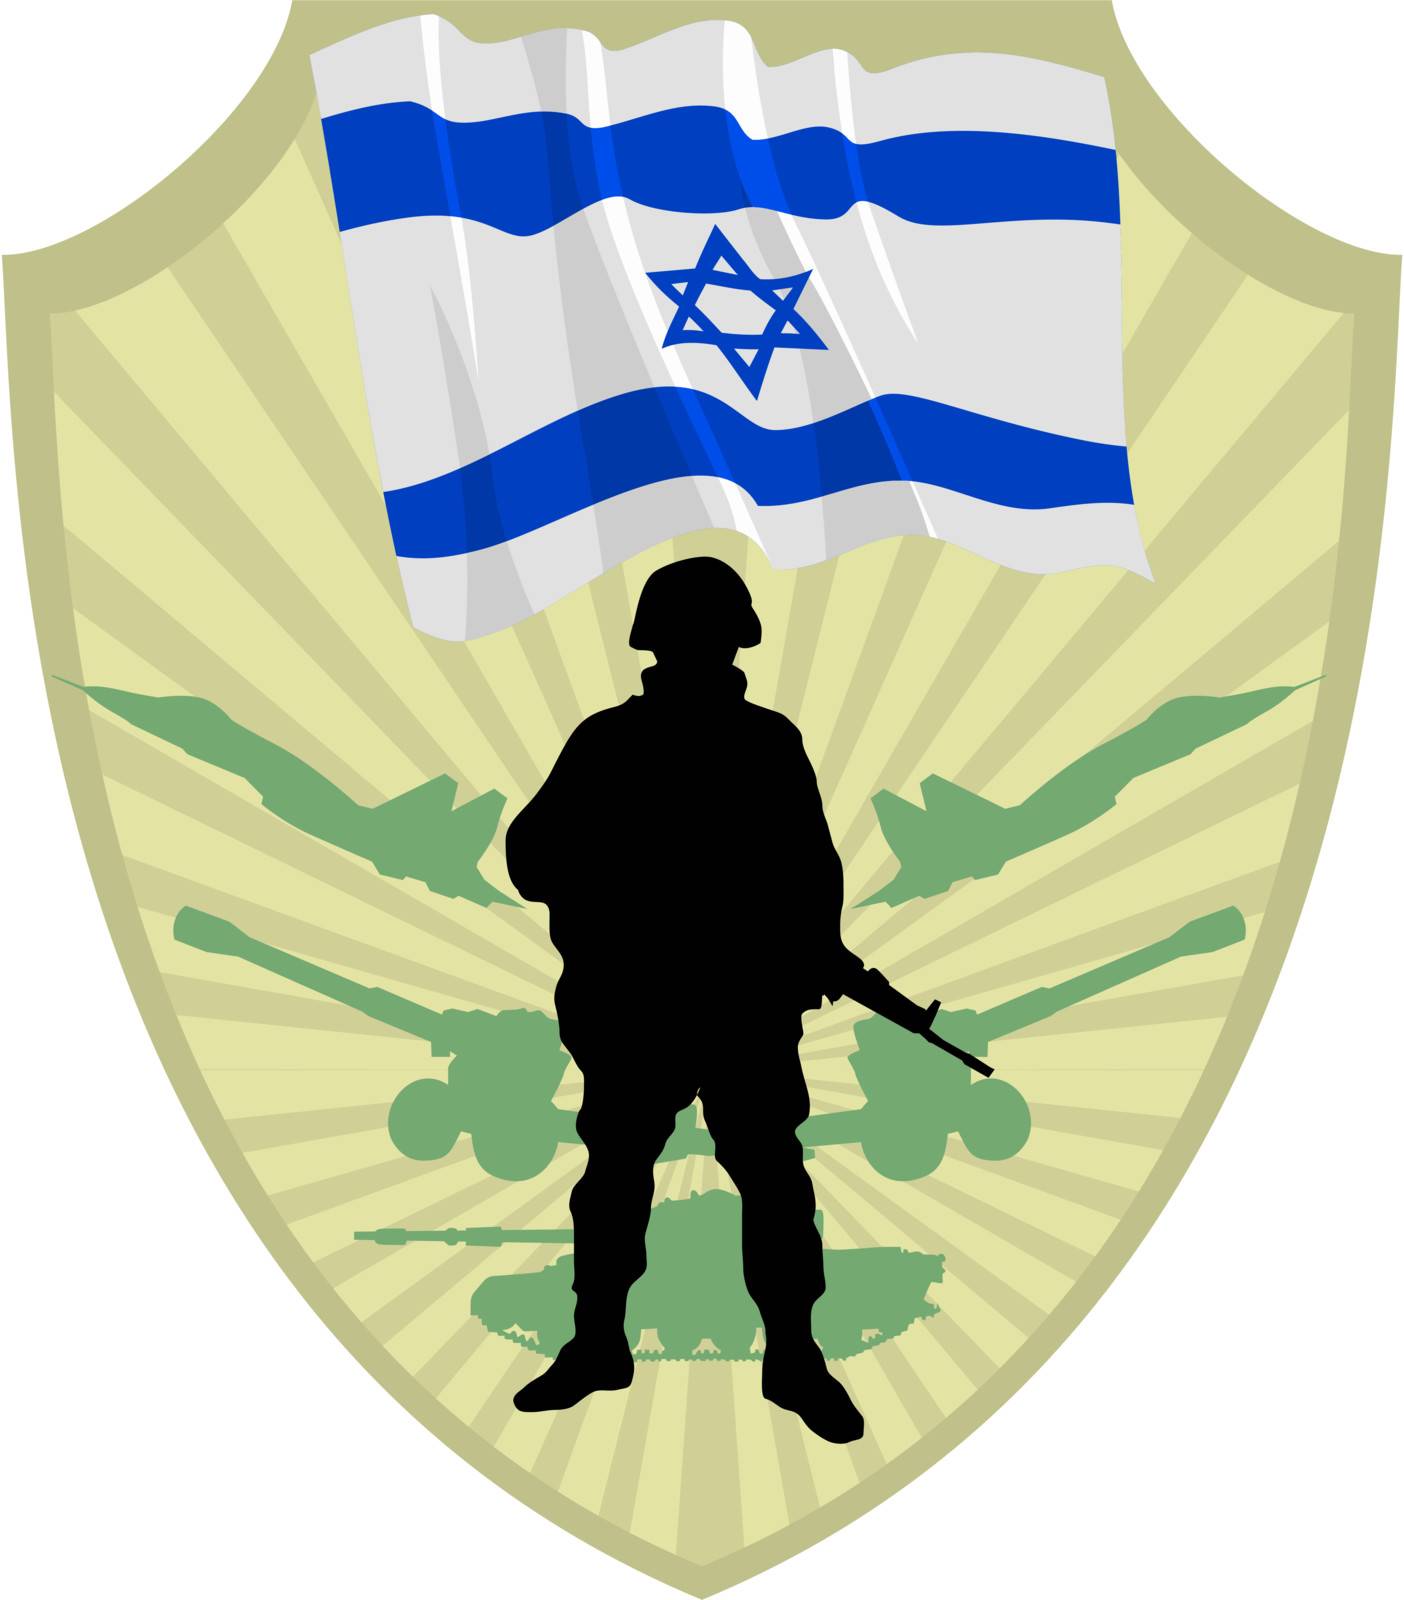 Army of Israel